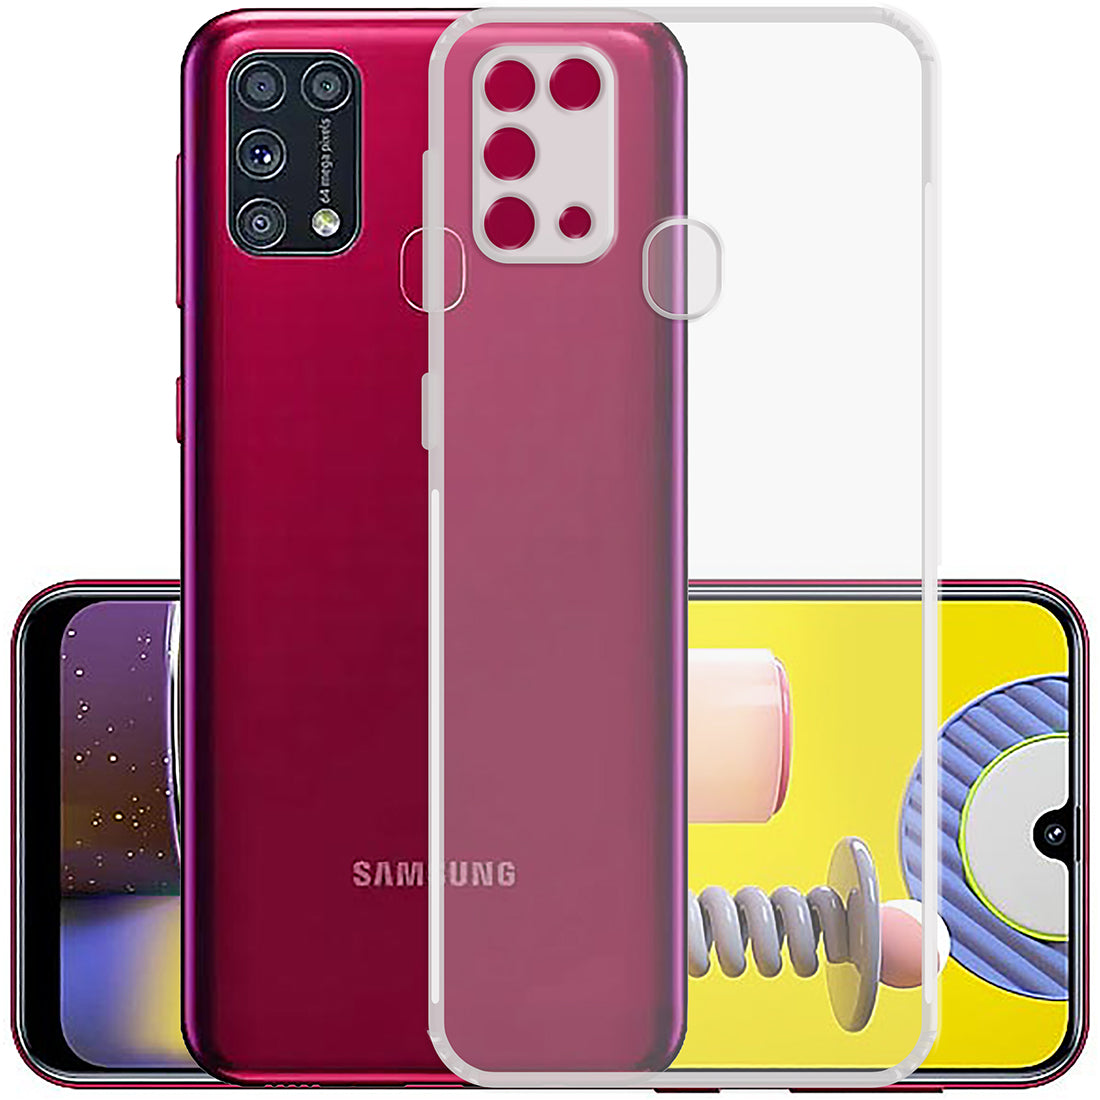 Samsung Galaxy M31 Prime / M31 / F41